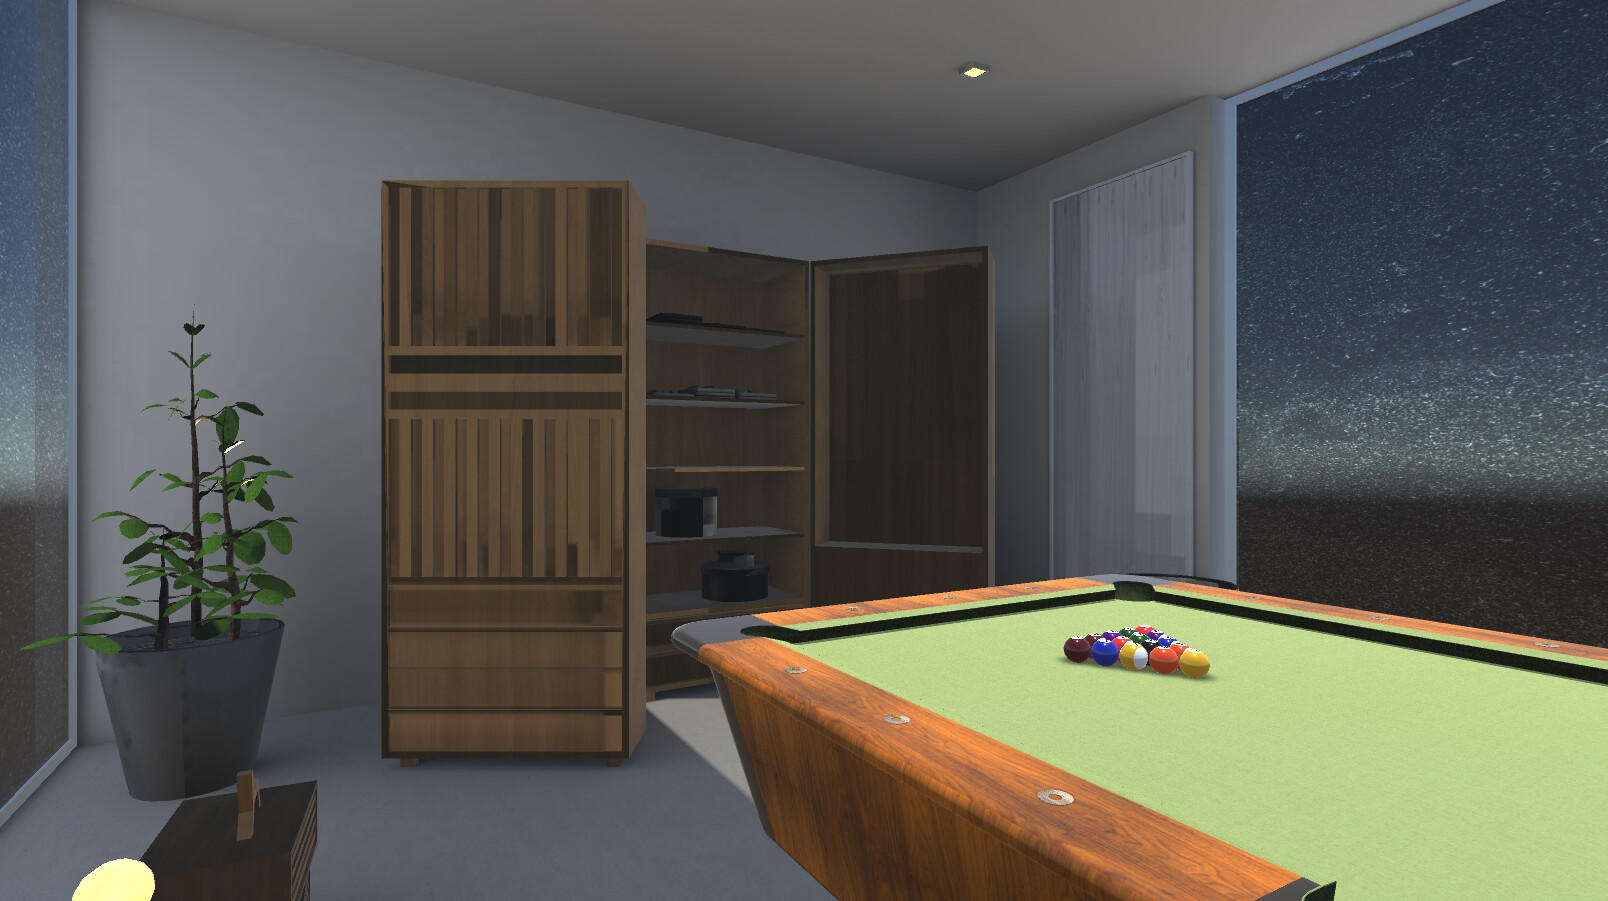 Screenshot of Pocketing the ball-Billiards Simulator